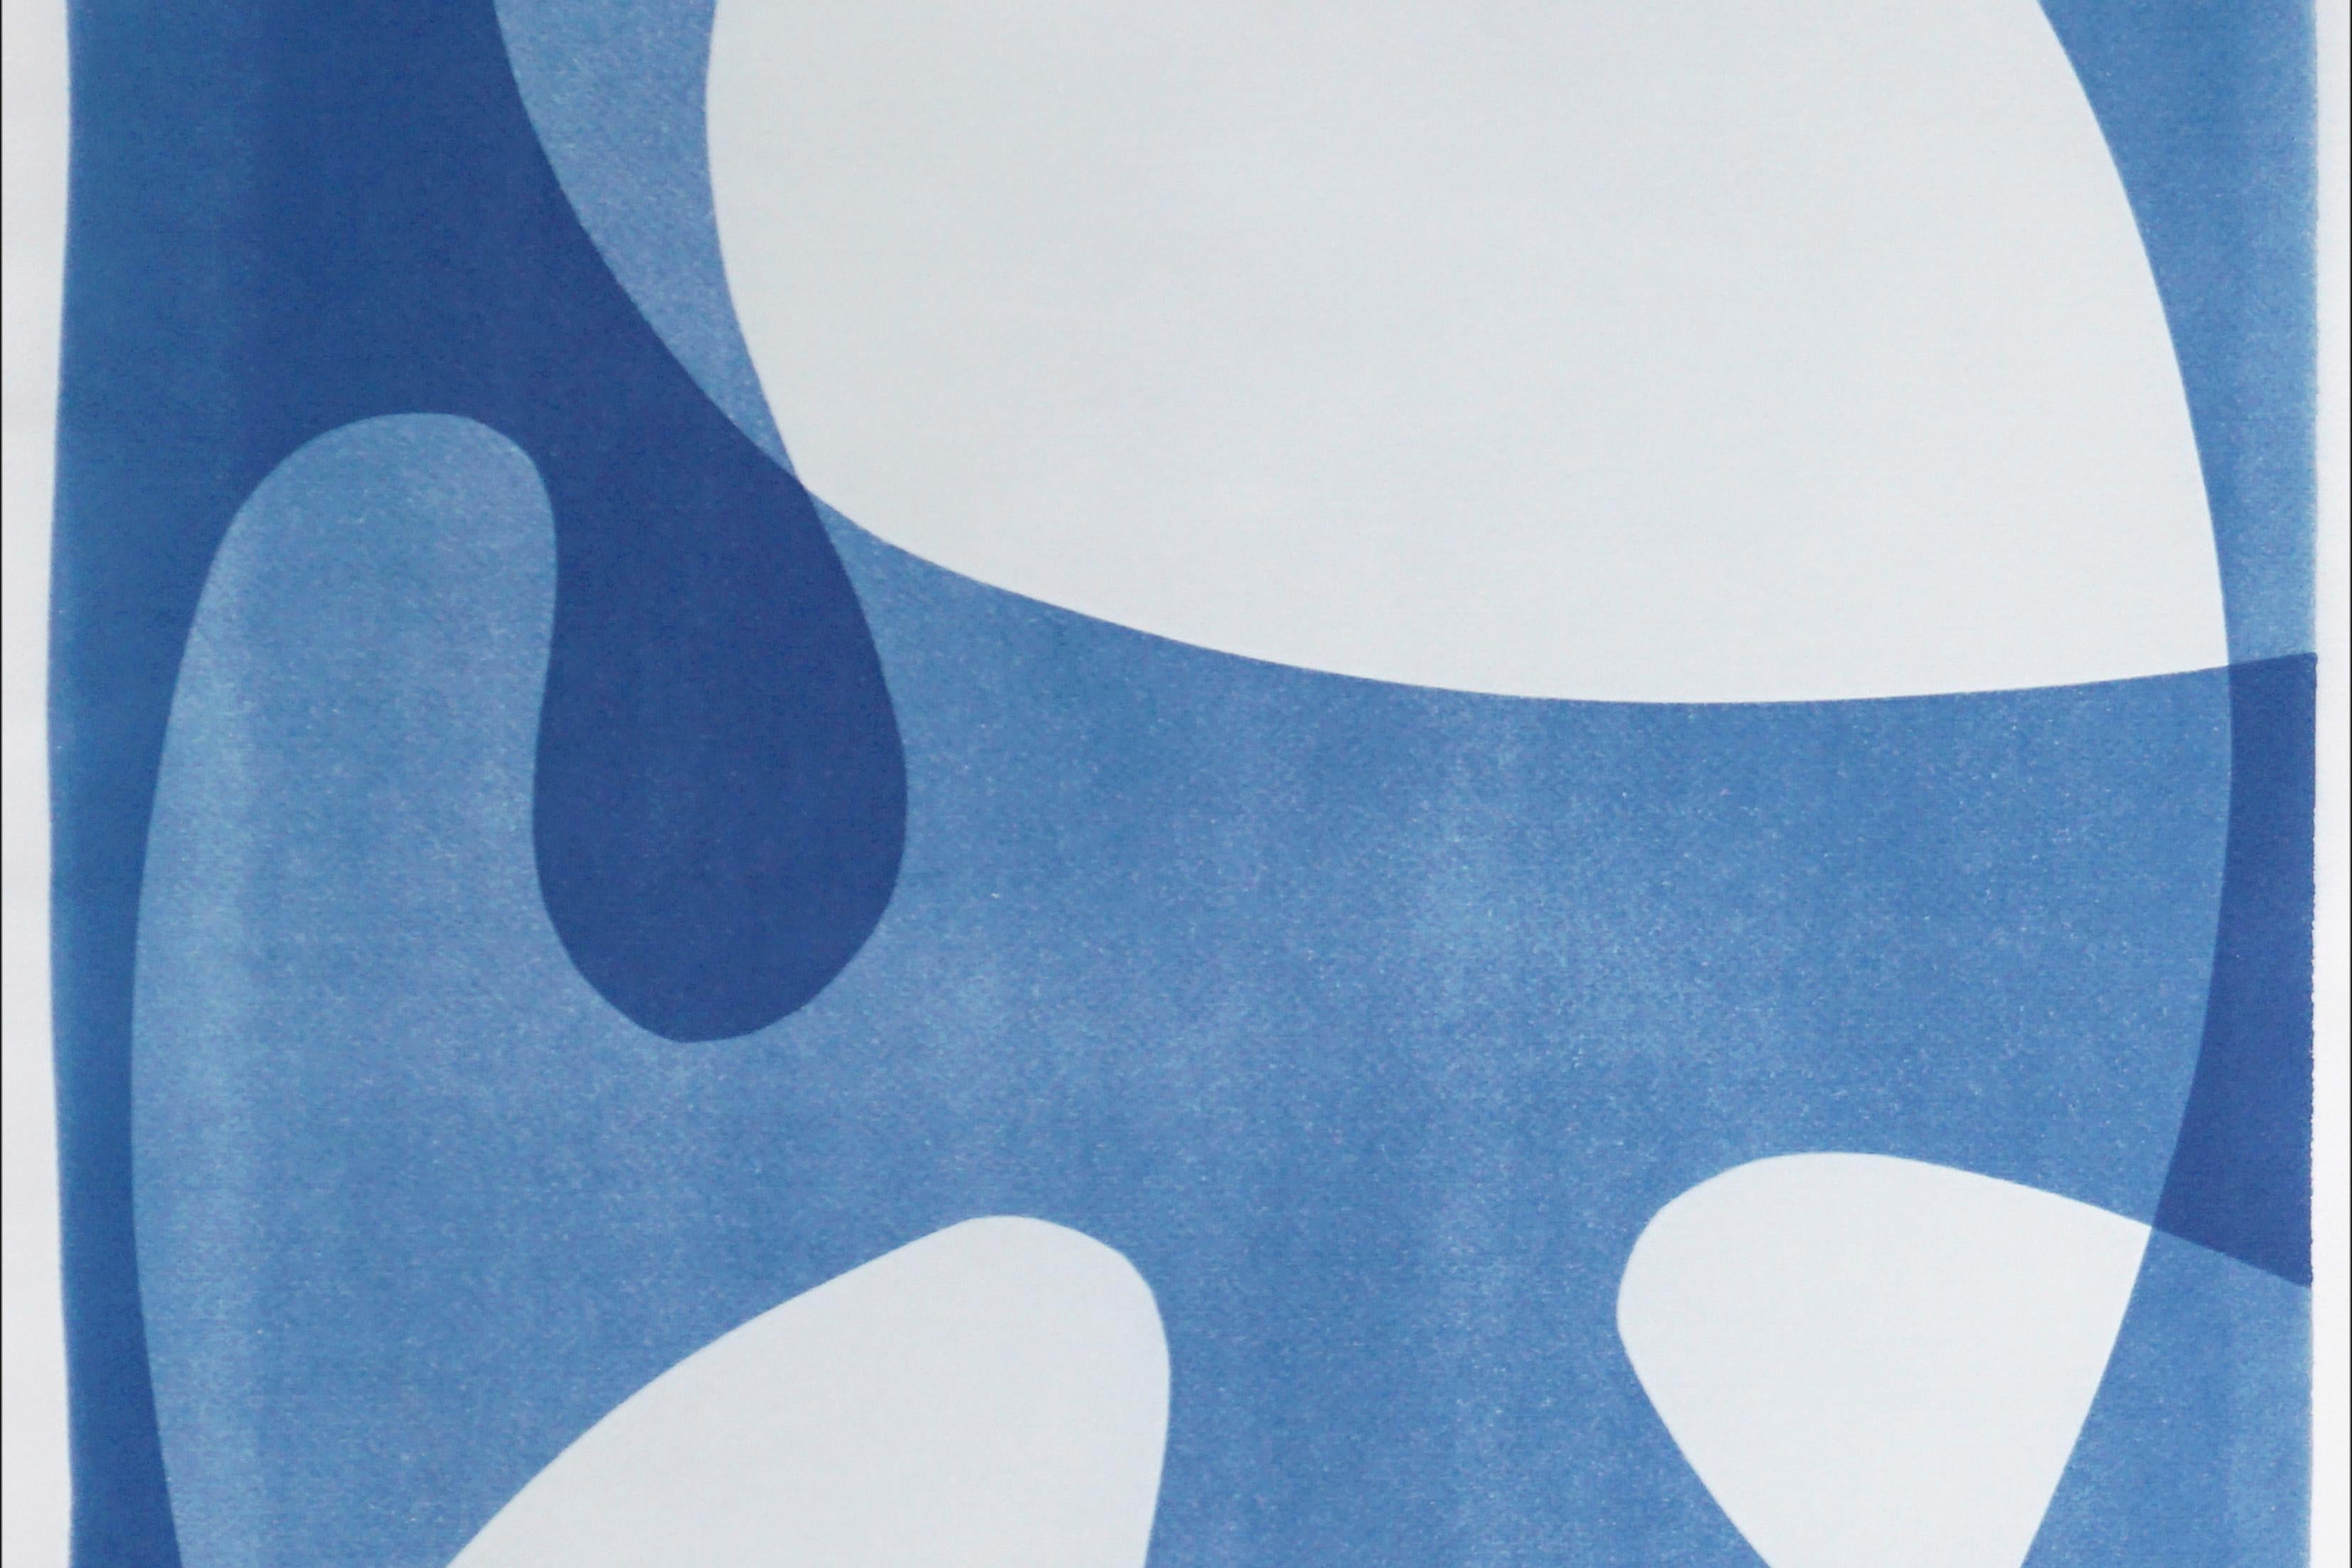 Positive Versus Negative, Mid-Century Shapes Blue Tones Cyanotype Print Diptych 1